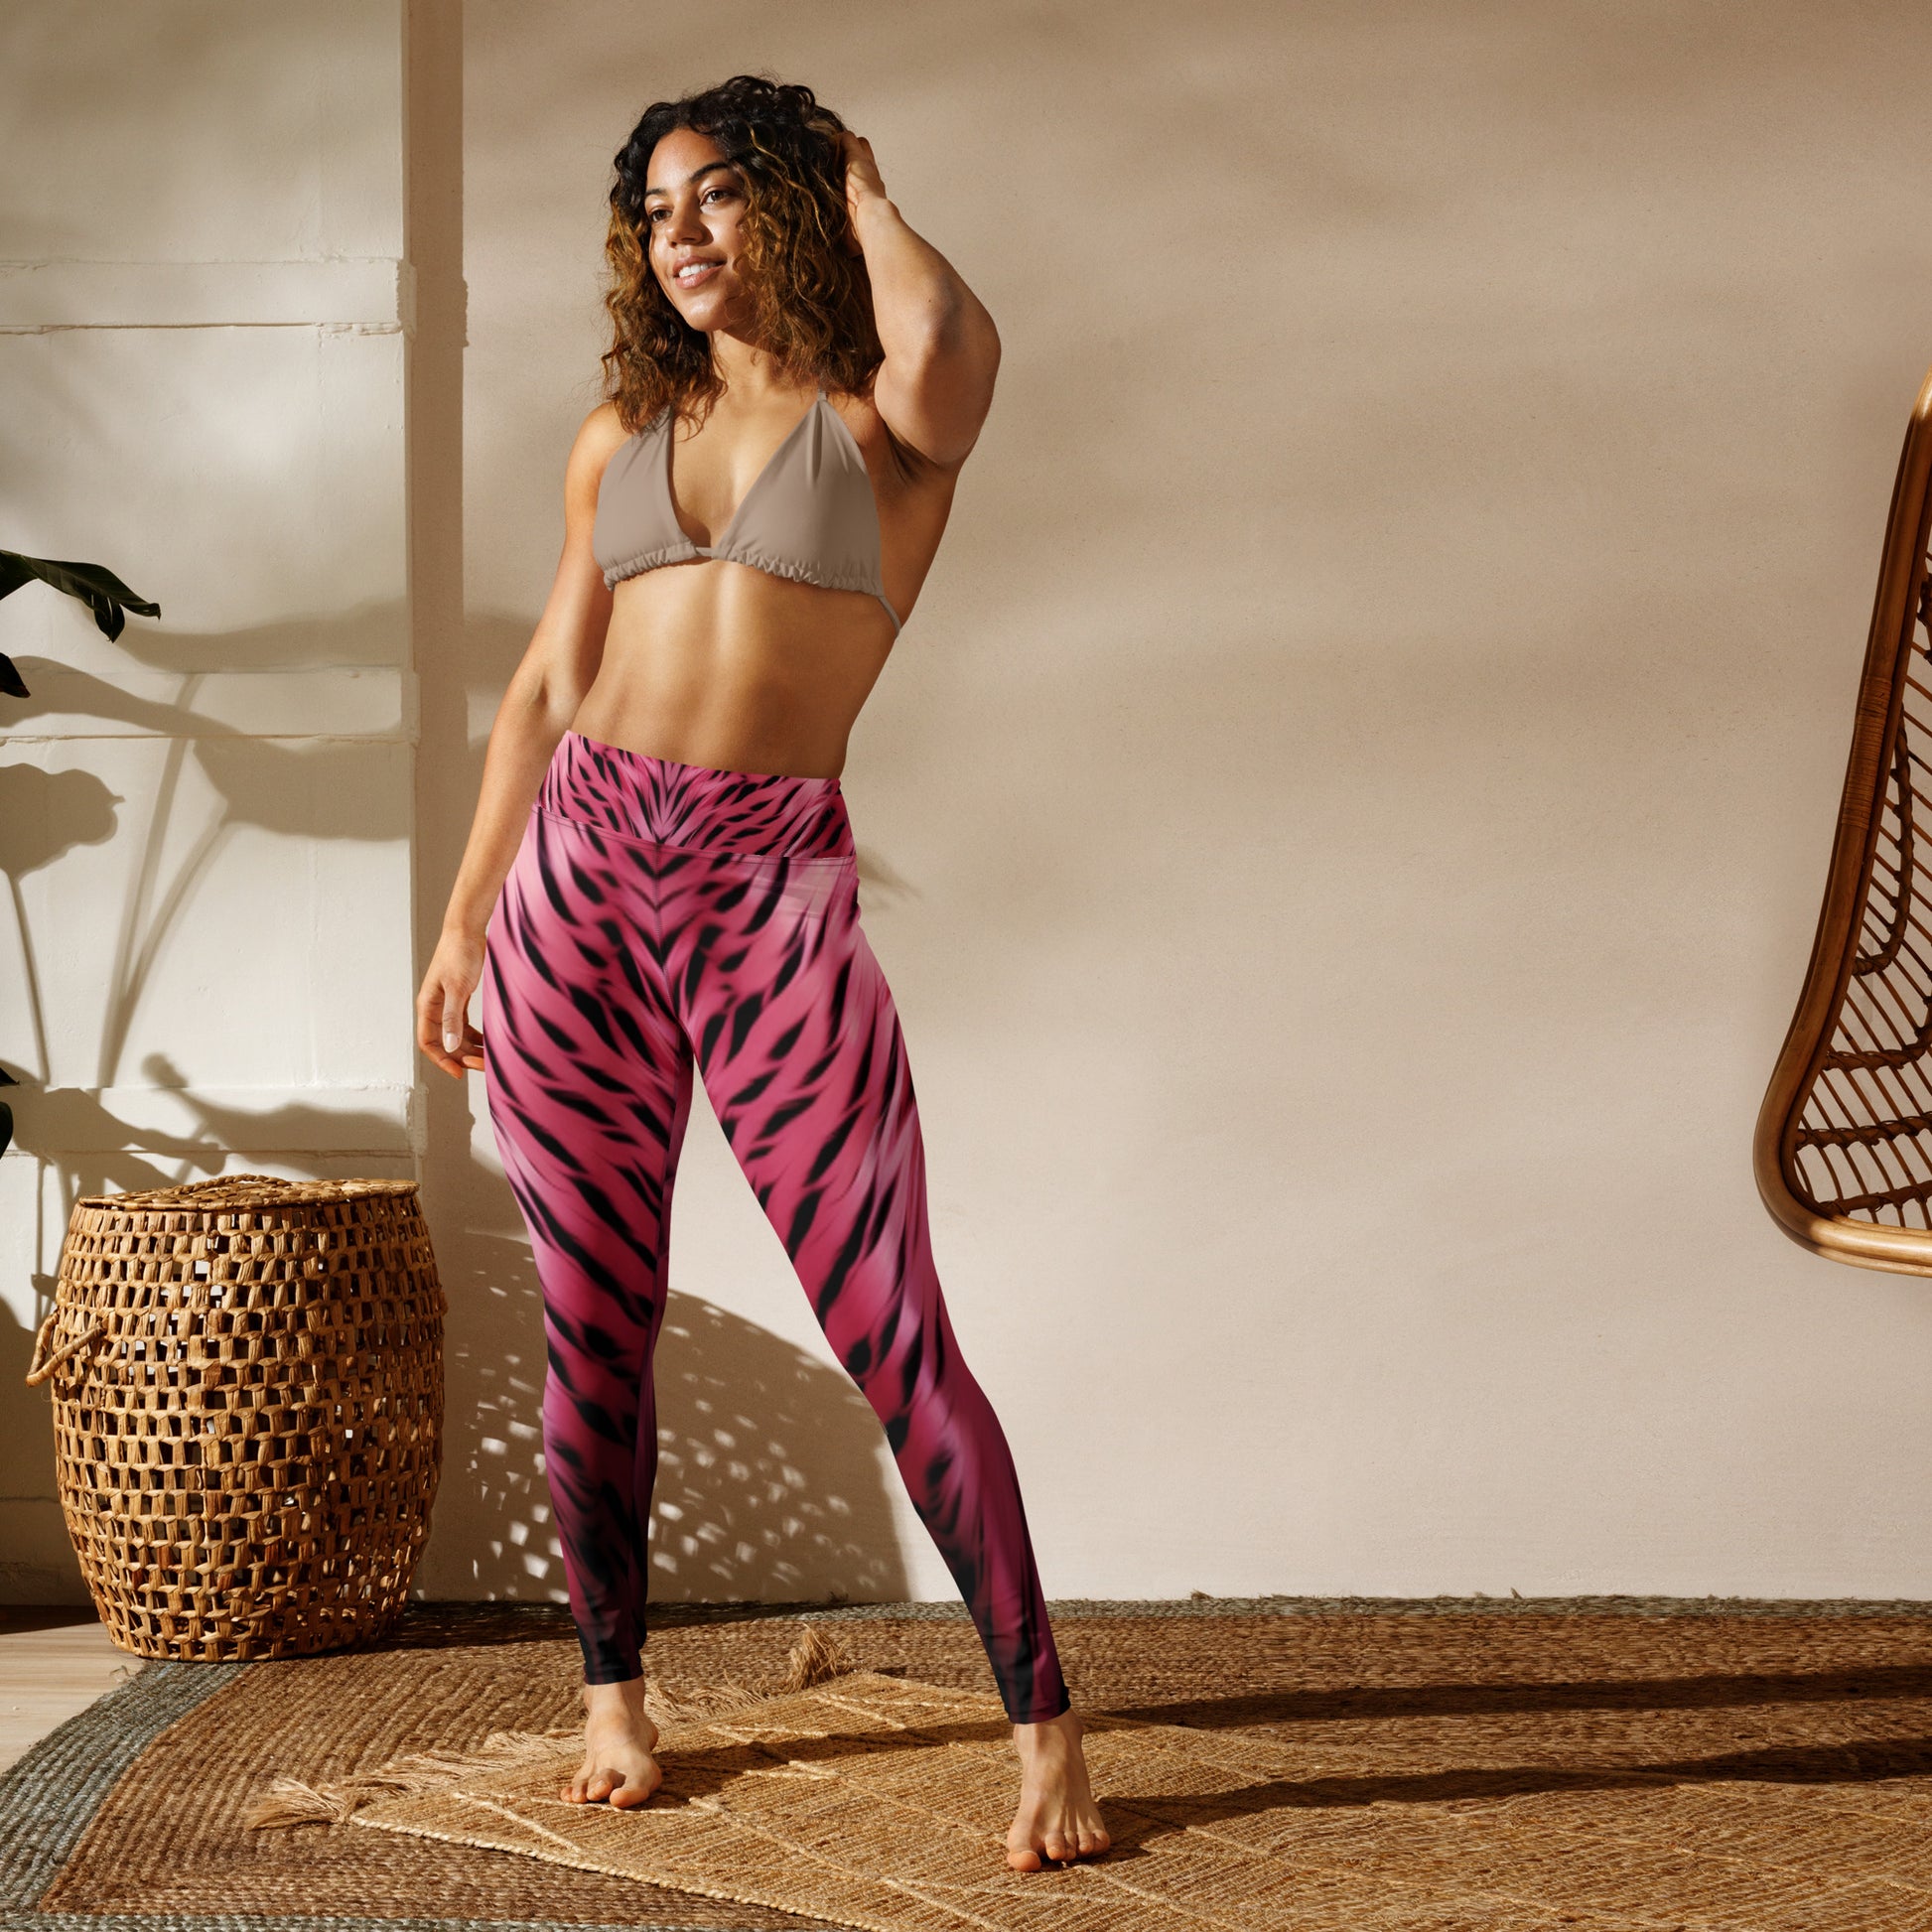 Women's A2S SAVG Yoga Capri Leggings Black w/ Pink Print – Avg2Savg Apparel